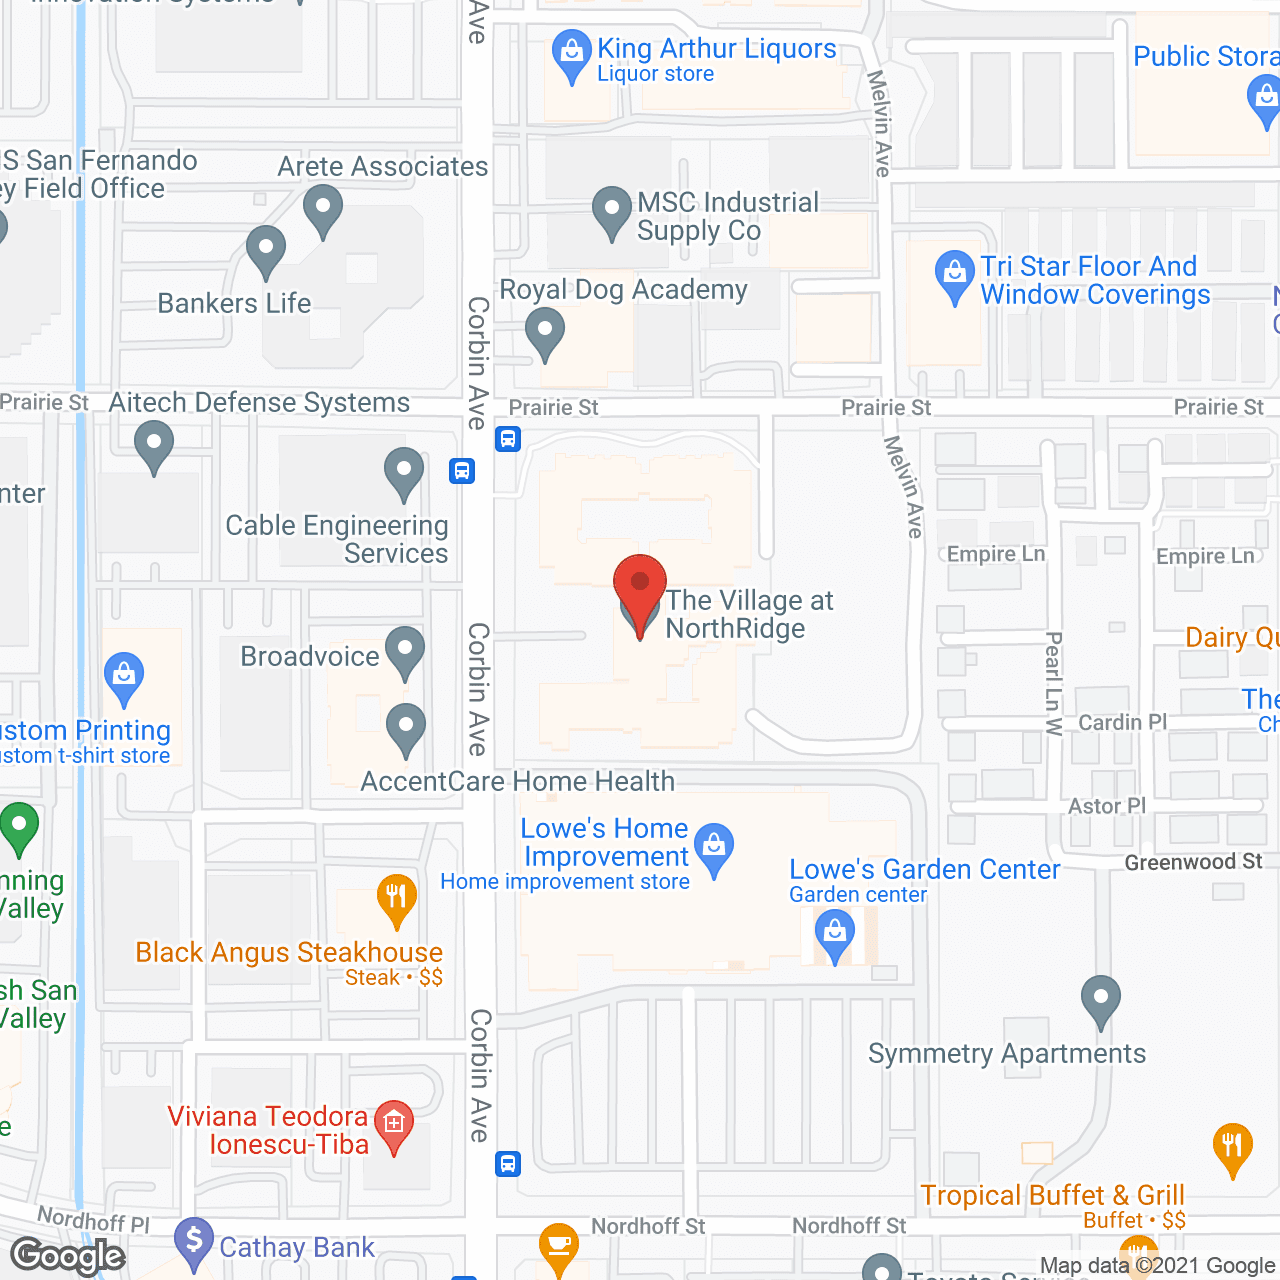 The Village at Northridge in google map